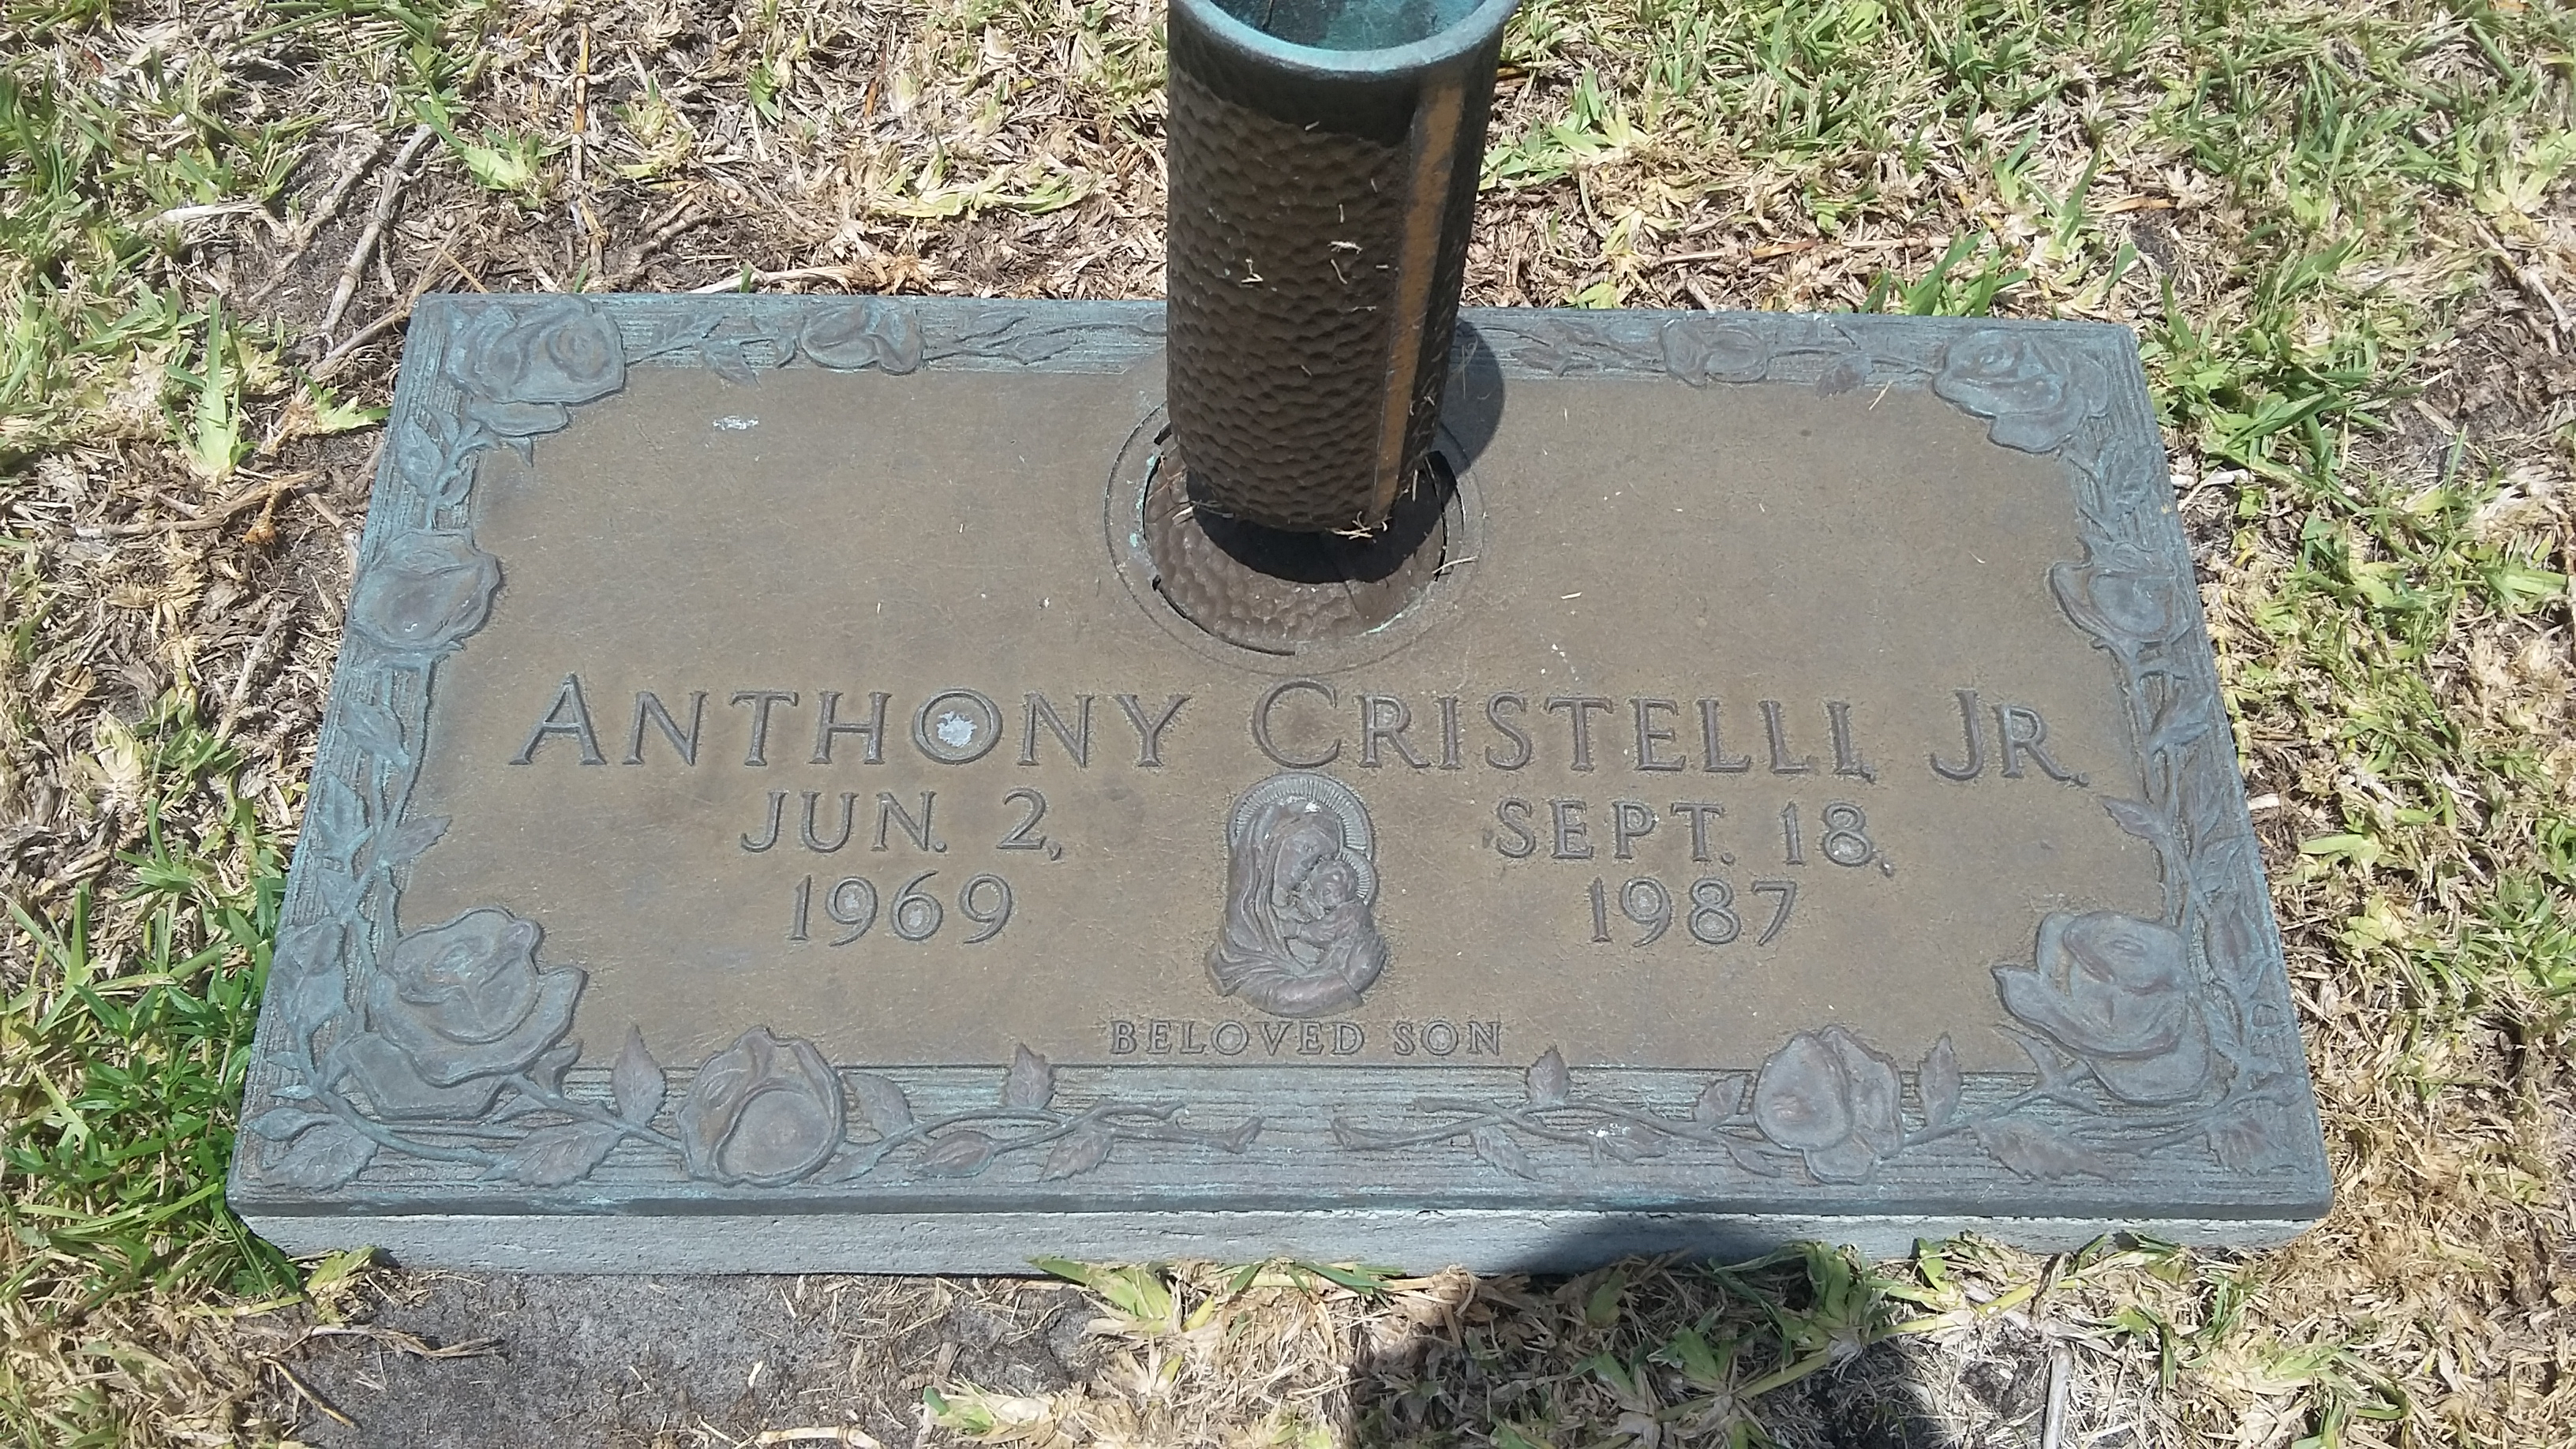 Anthony Cristelli, Jr